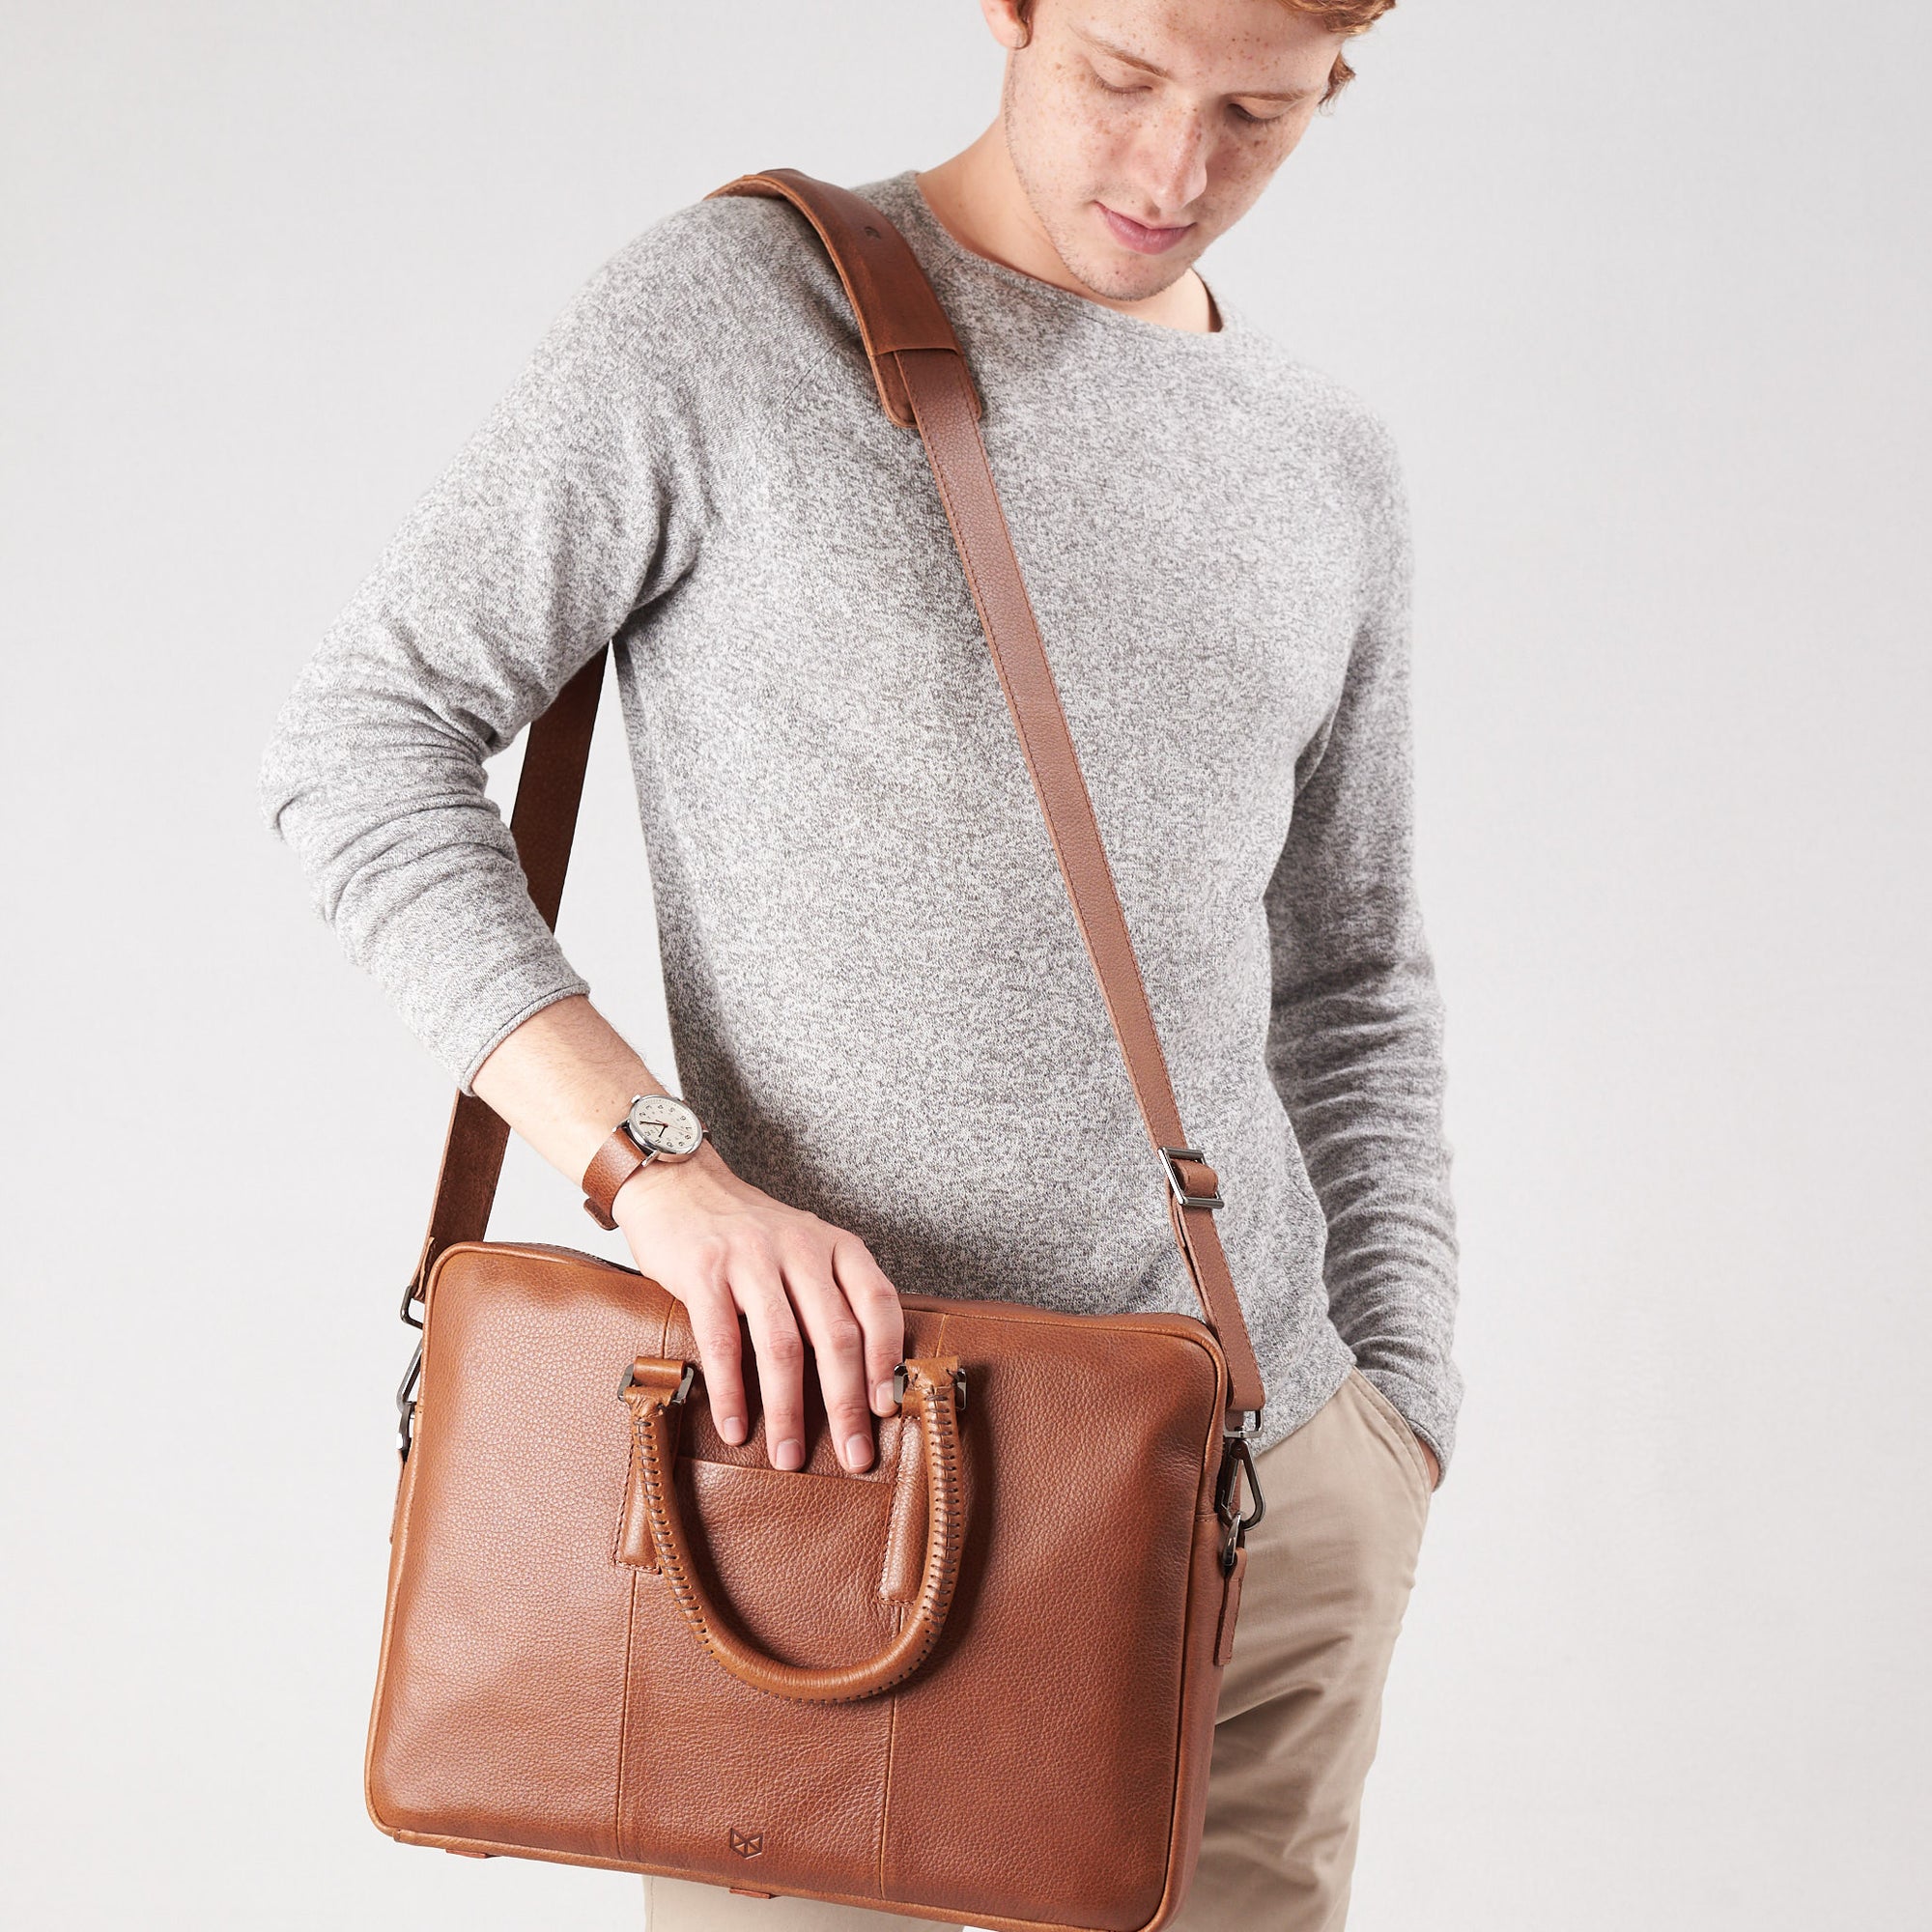 Shoulder bag in use by model. Tan leather briefcase laptop bag for men. Gazeli laptop briefcase by Capra Leather